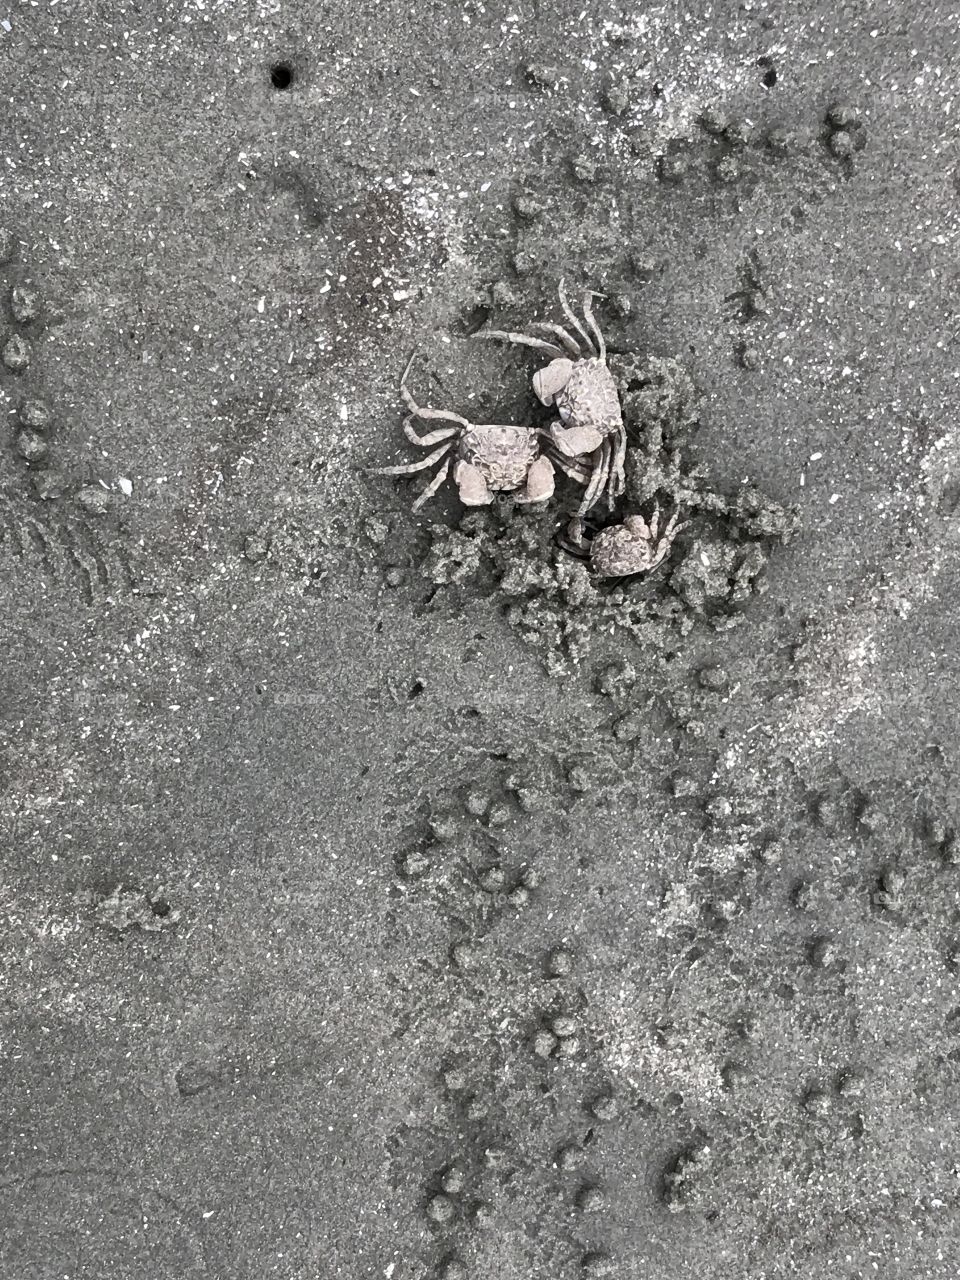 Three crabs are on the beach near a hole